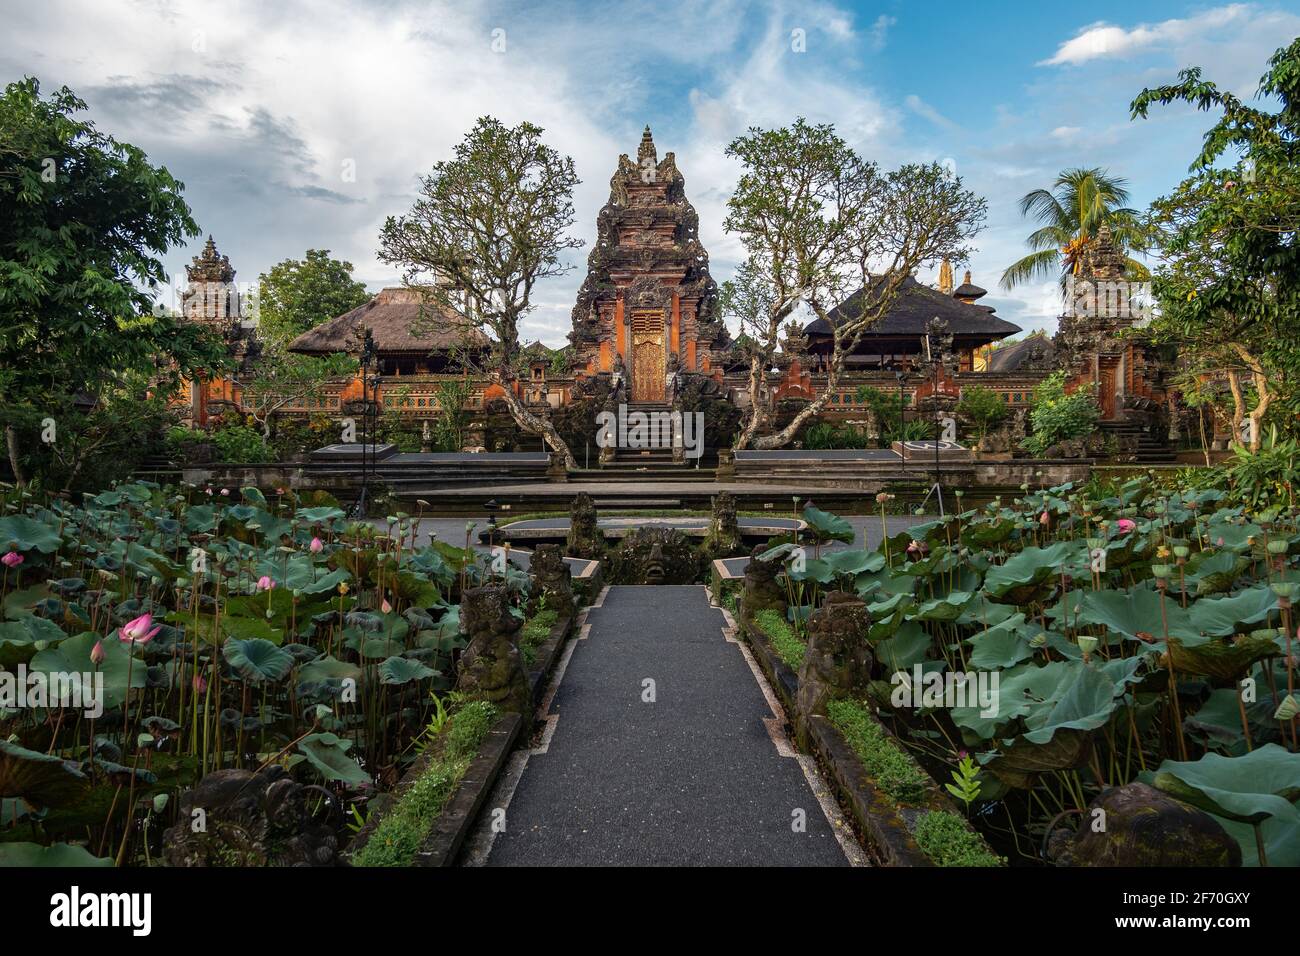 Pura Taman Saraswati temple aka Ubud Water Palace in Ubud, Bali, Indonesia  Stock Photo - Alamy